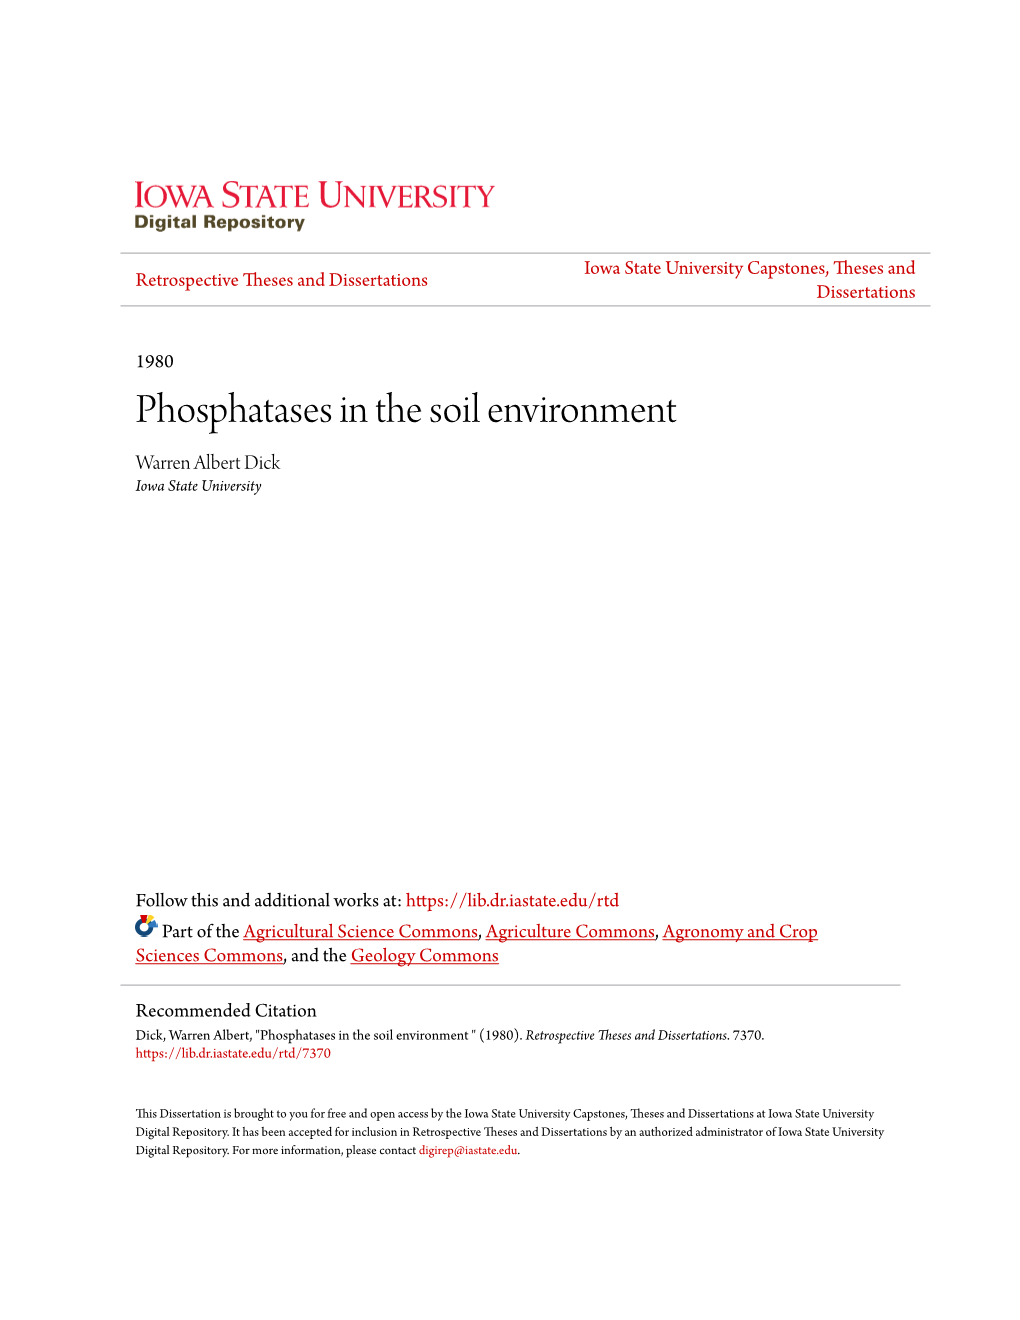 Phosphatases in the Soil Environment Warren Albert Dick Iowa State University